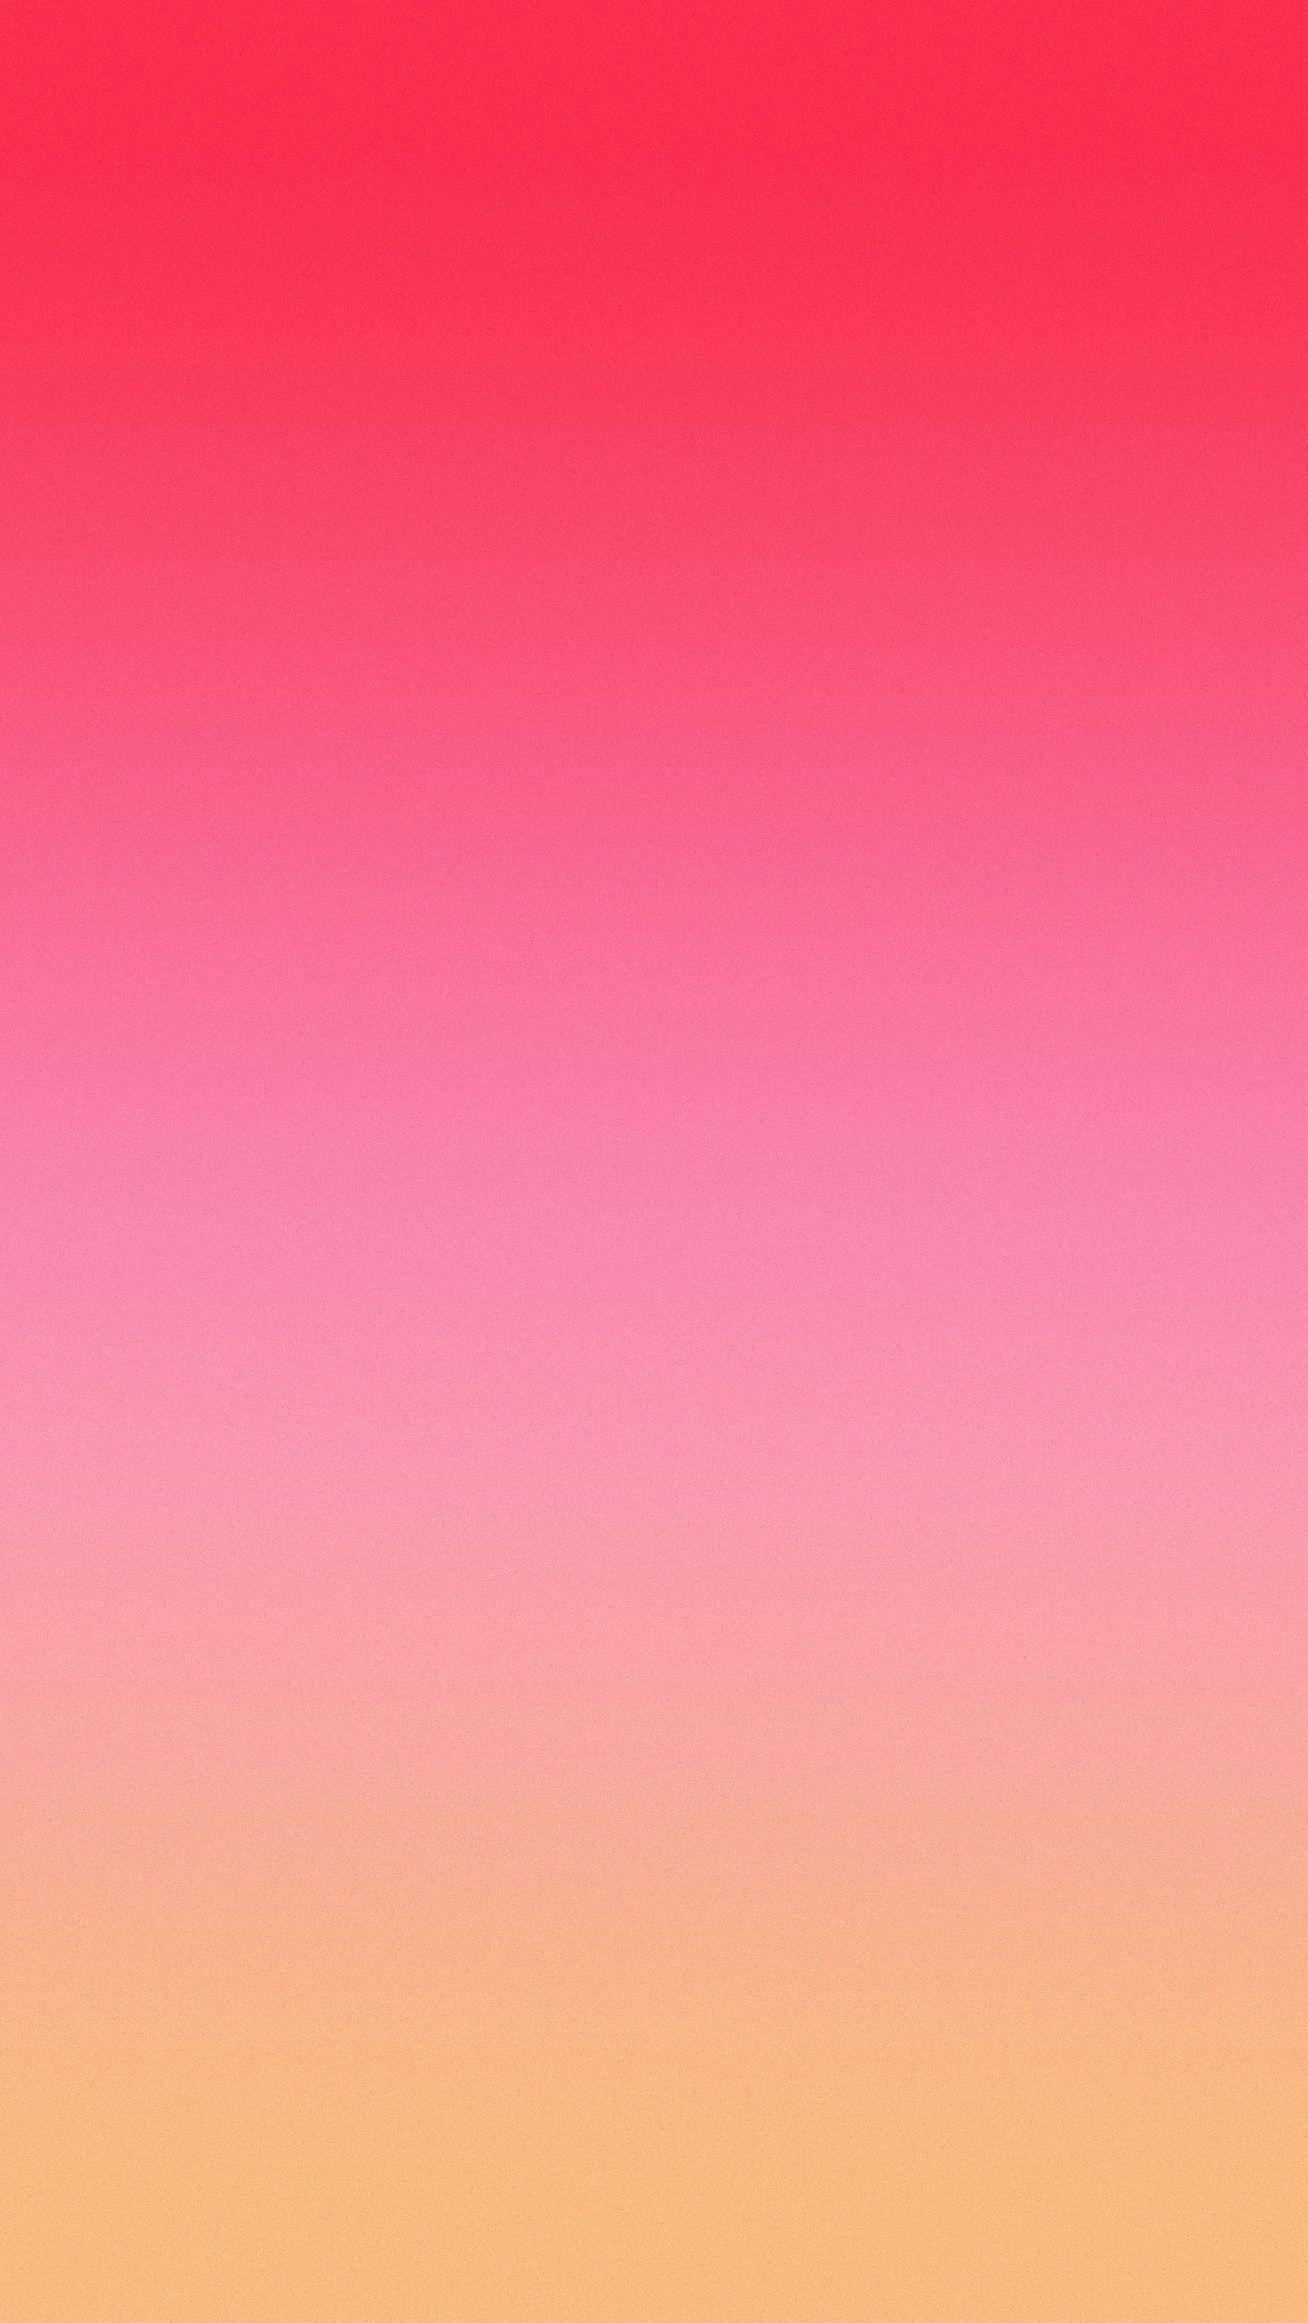 Beautiful Pink Orange Gradient Background IPhone Wallpaper. LV